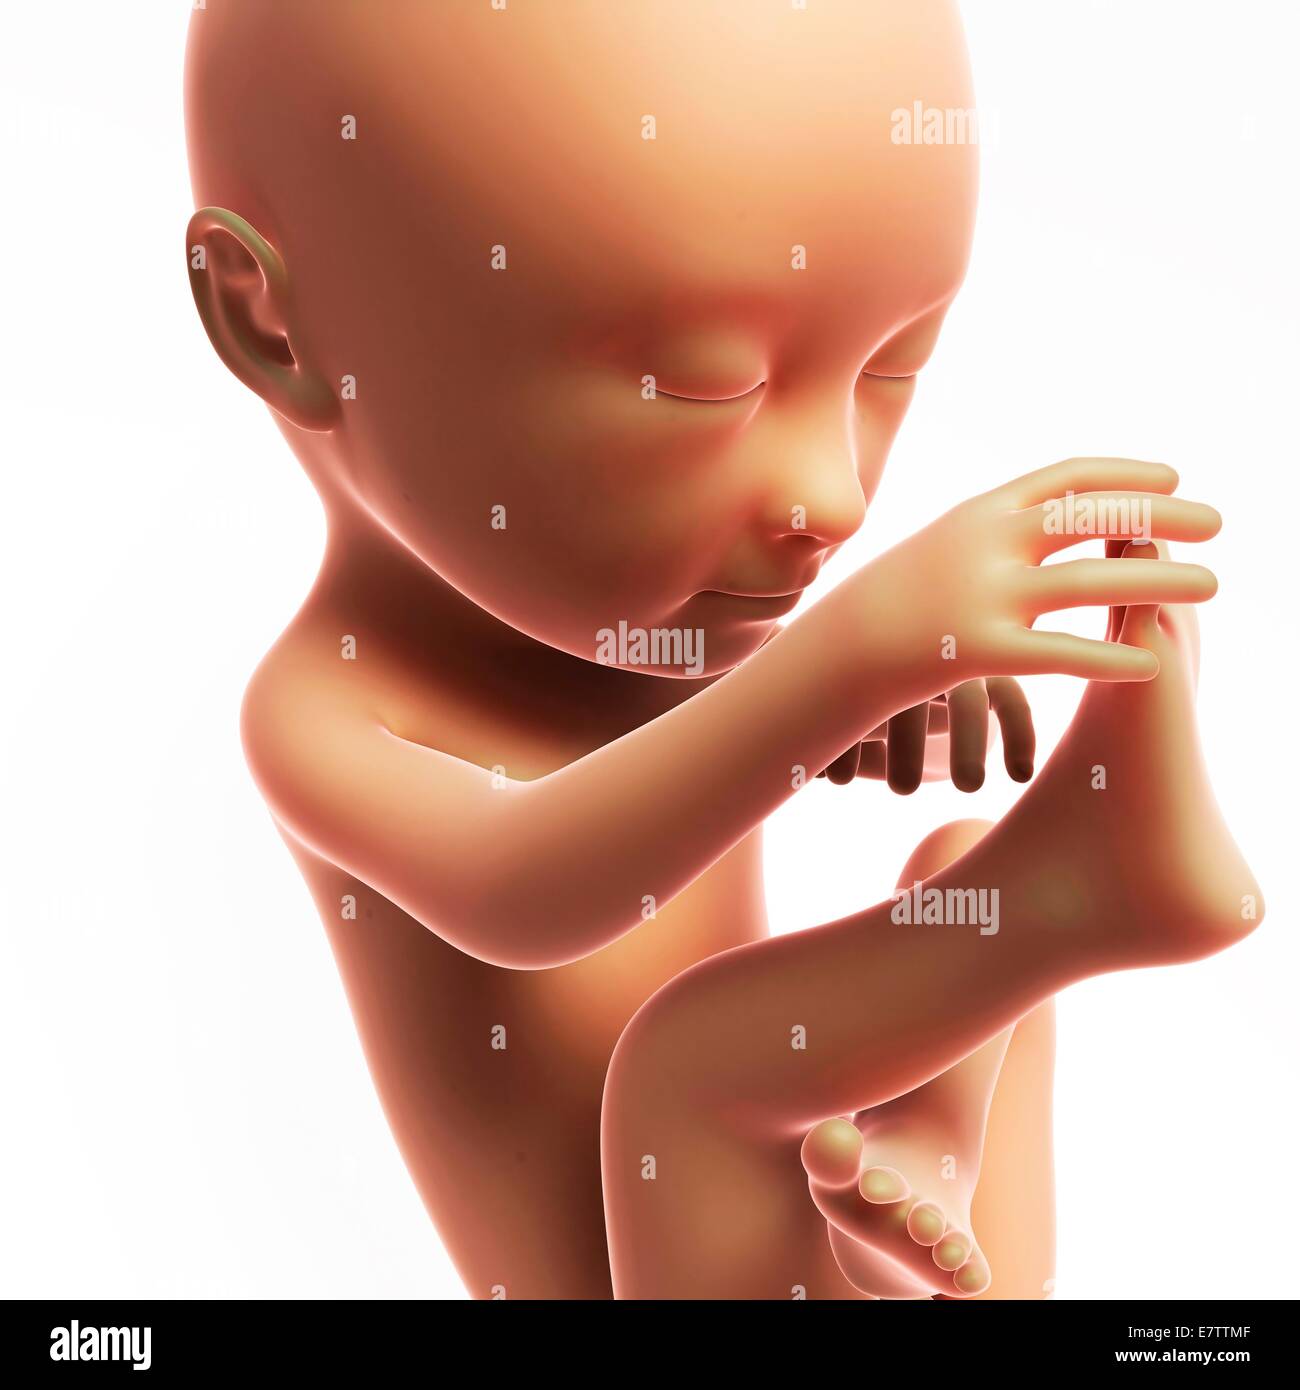 fetal development month 7